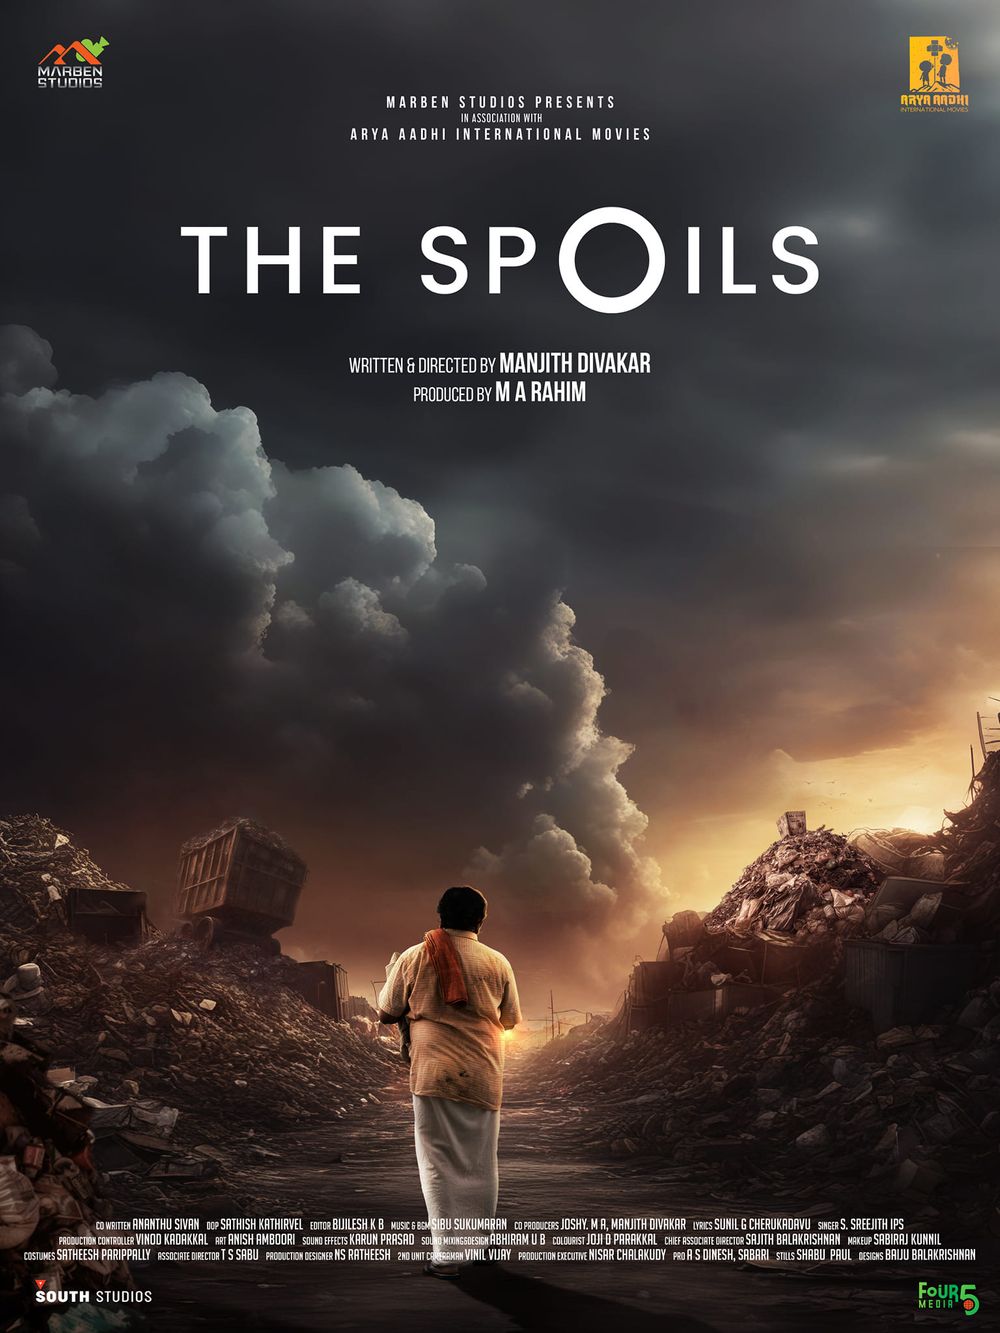 The Spoils Movie Review